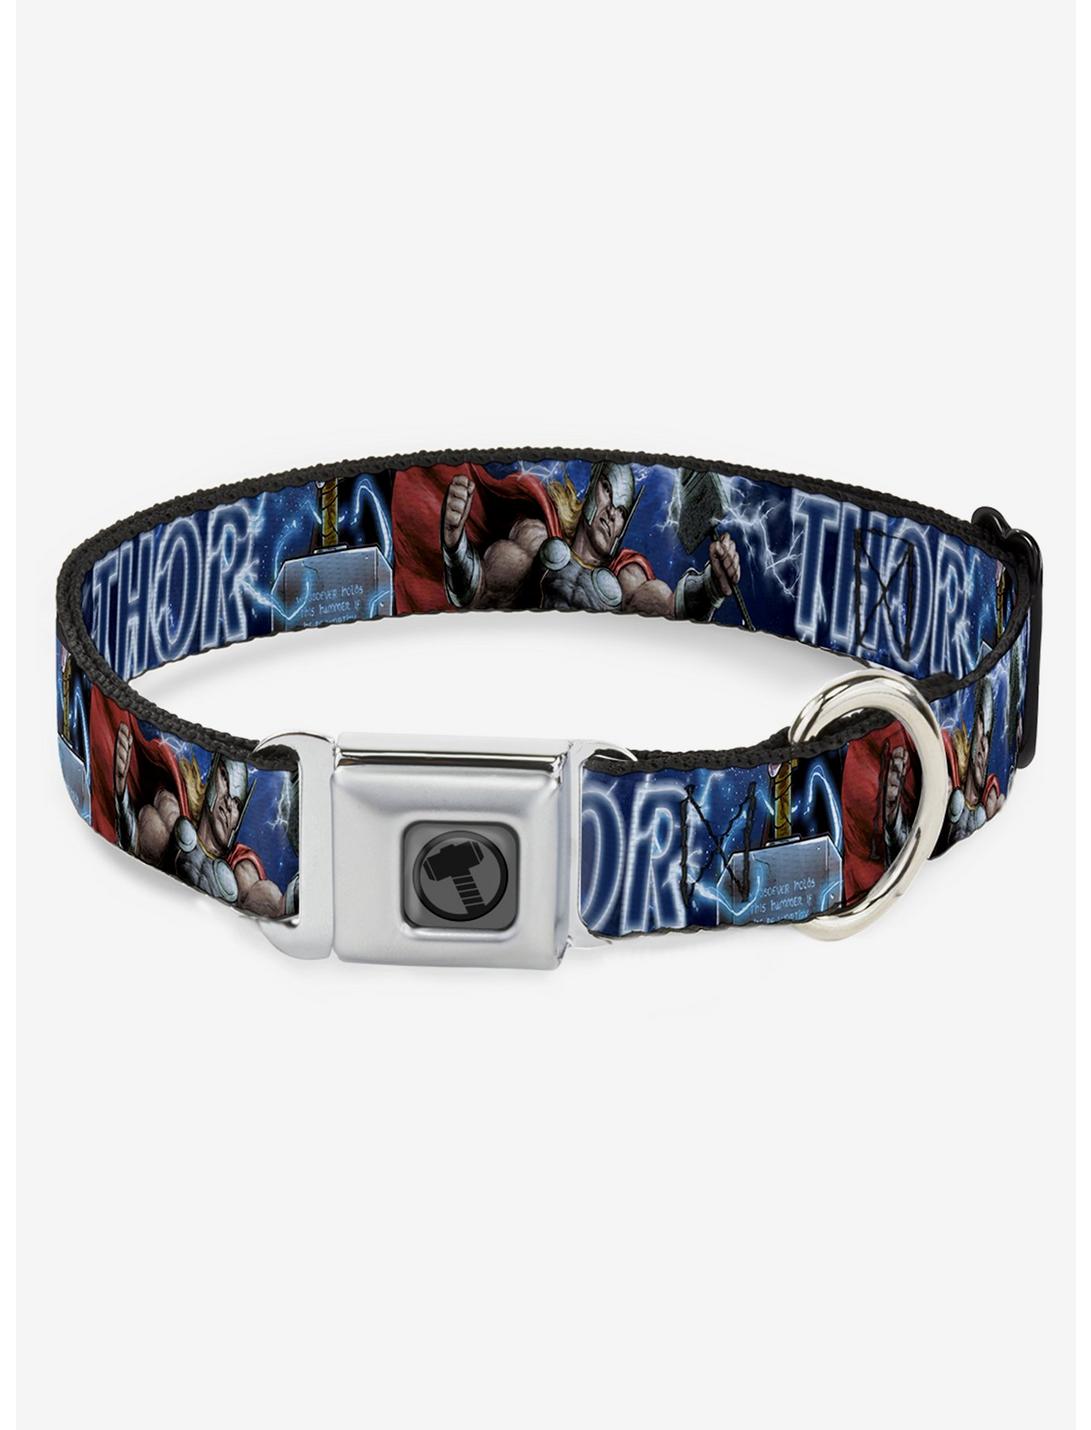 Marvel Thor Avengers Hammer Action Pose Galaxy Seatbelt Buckle Dog Collar, BLUE, hi-res